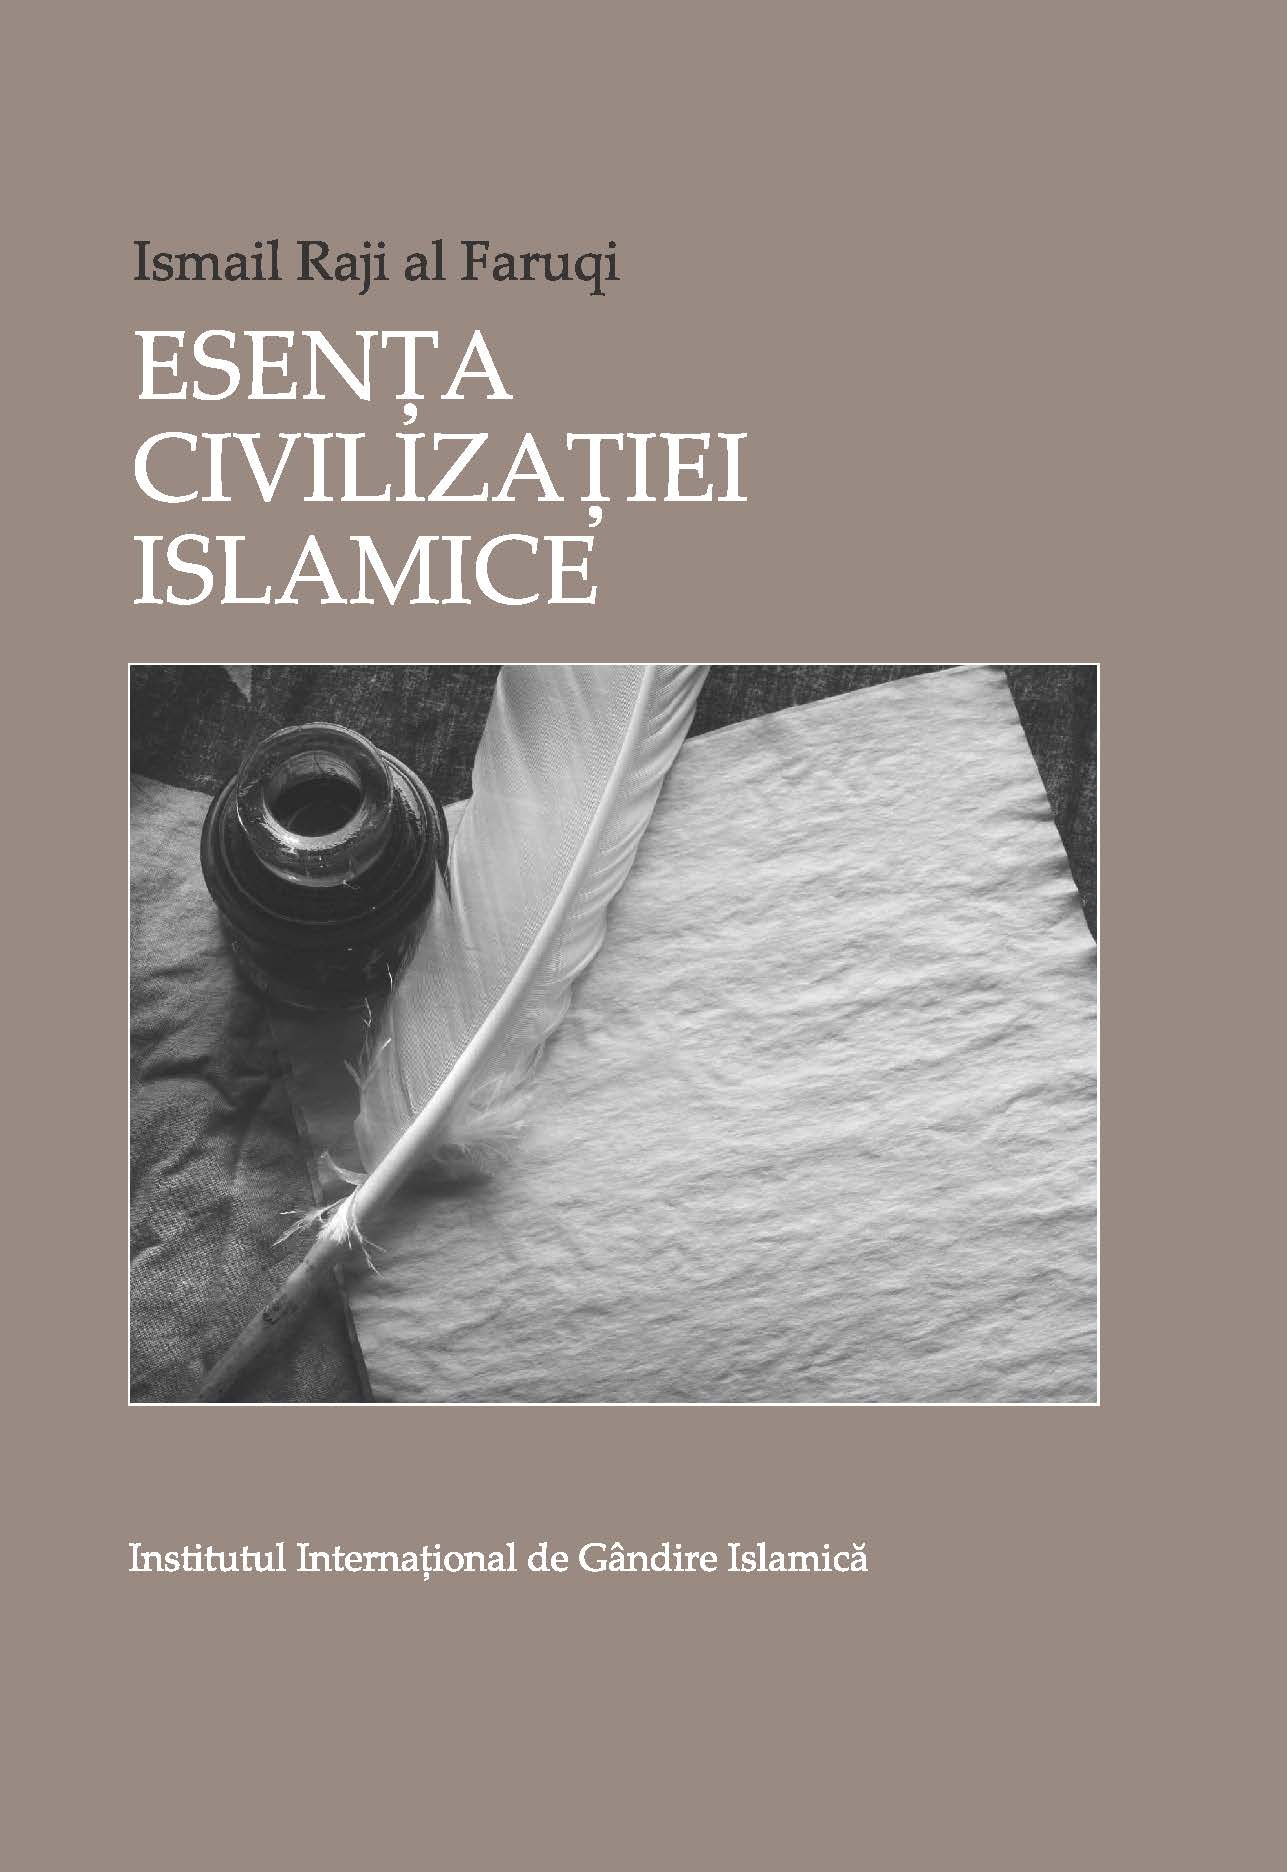 (Romanian Language) Esența civilizației islamice (The Essence of Islamic Civilization – Occasional Paper Series 21)